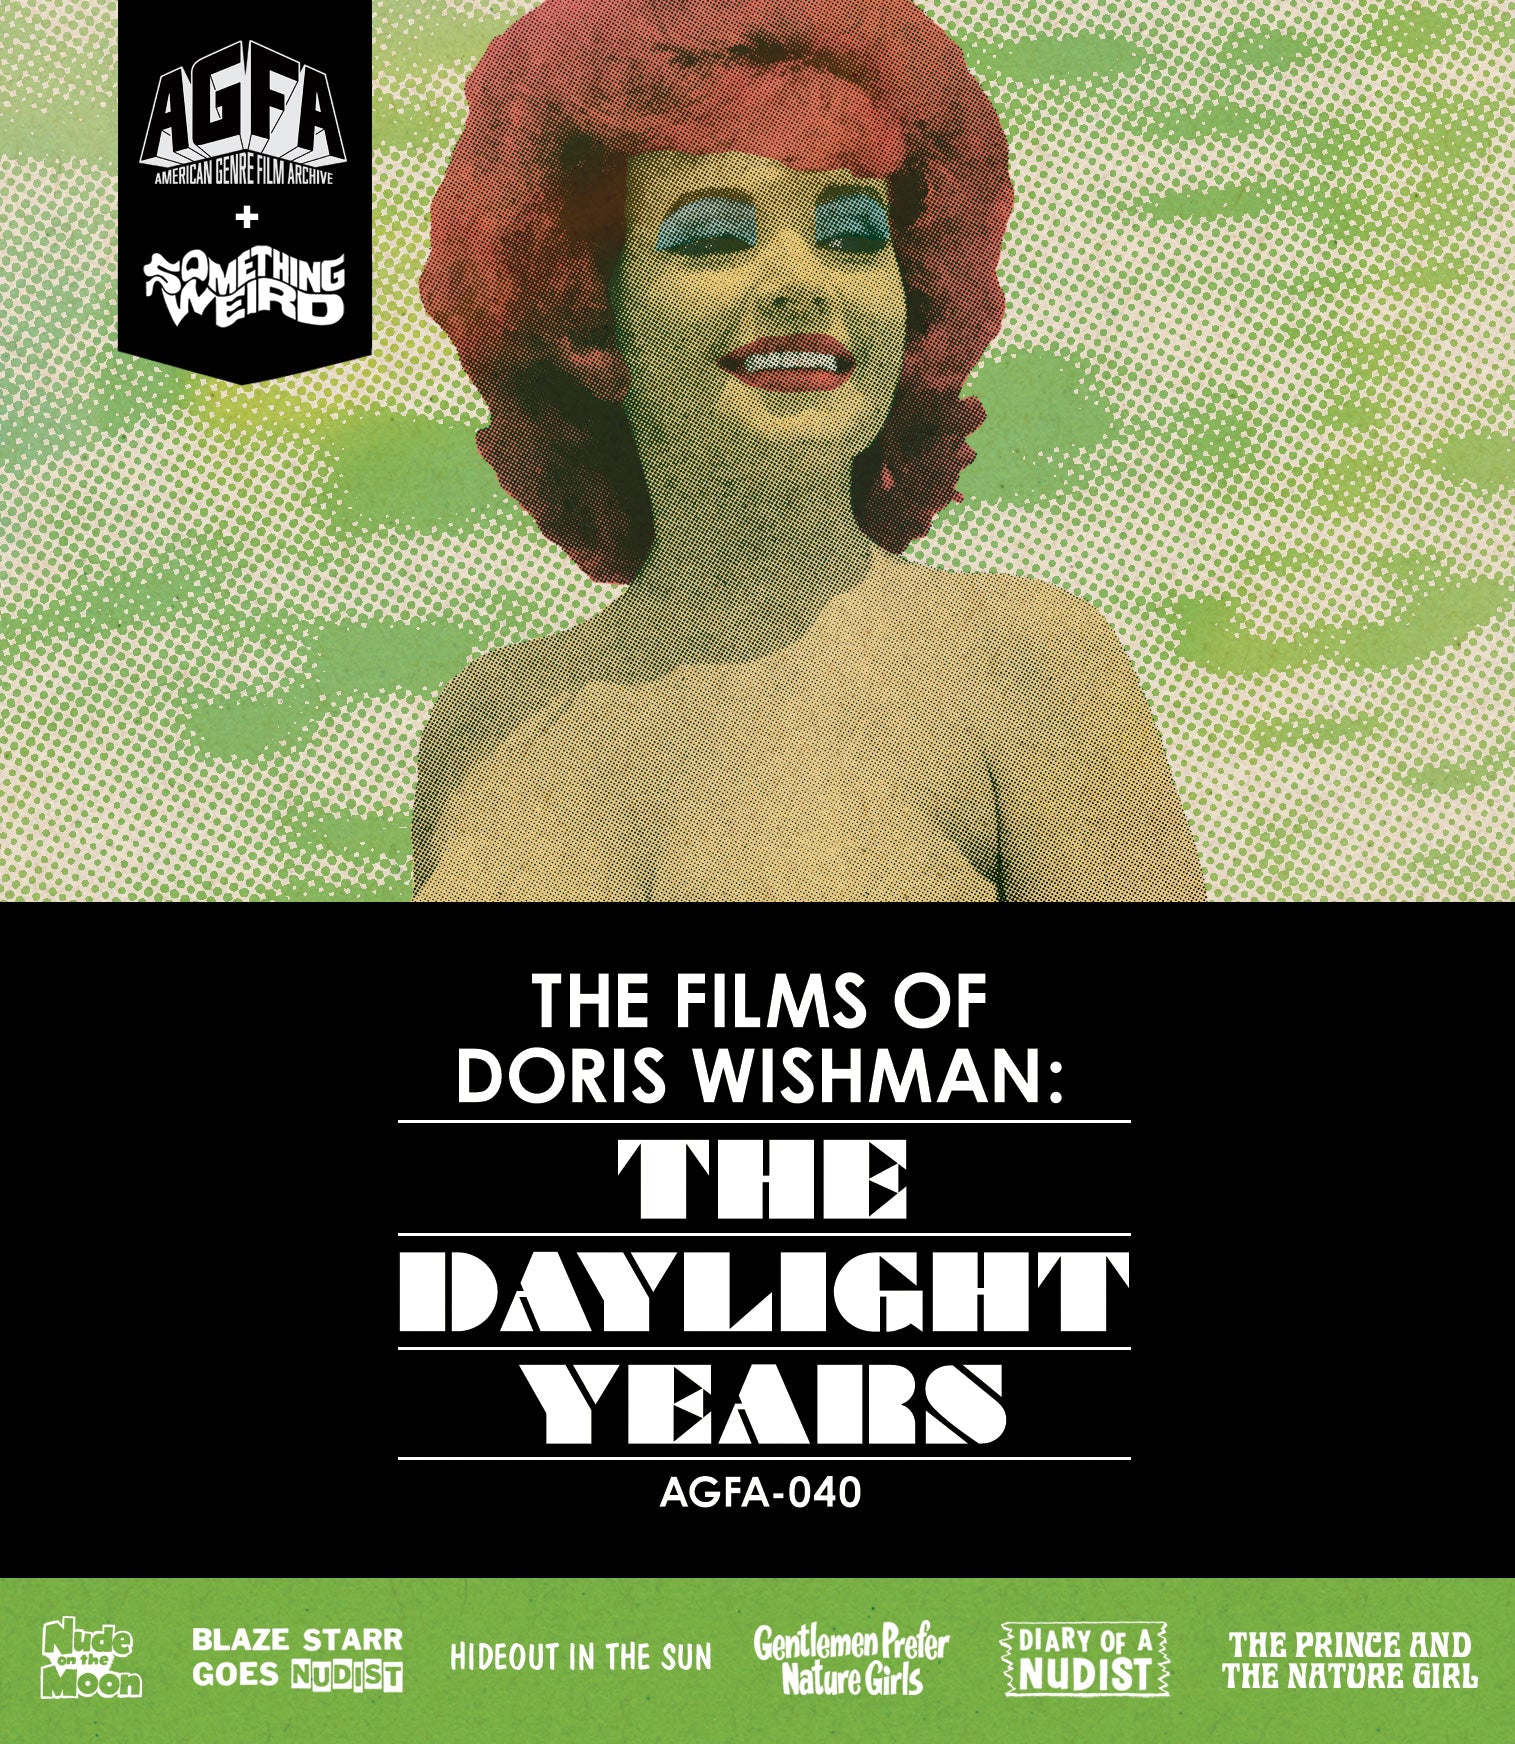 THE FILMS OF DORIS WISHMAN: THE DAYLIGHT YEARS BLU-RAY